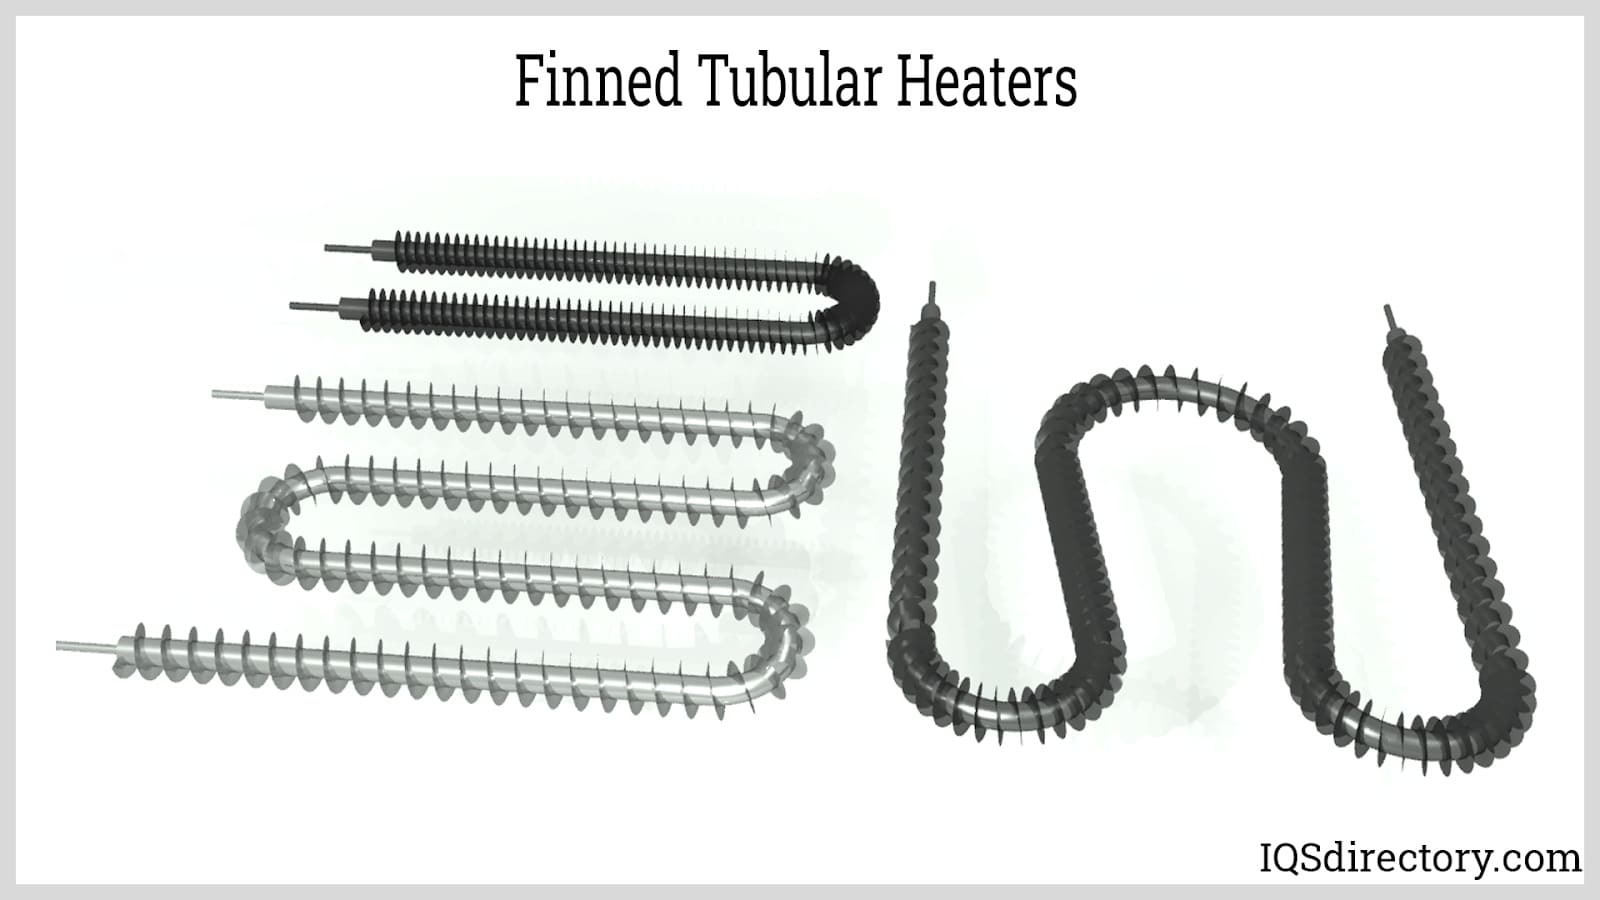 Finned Tubular Heaters